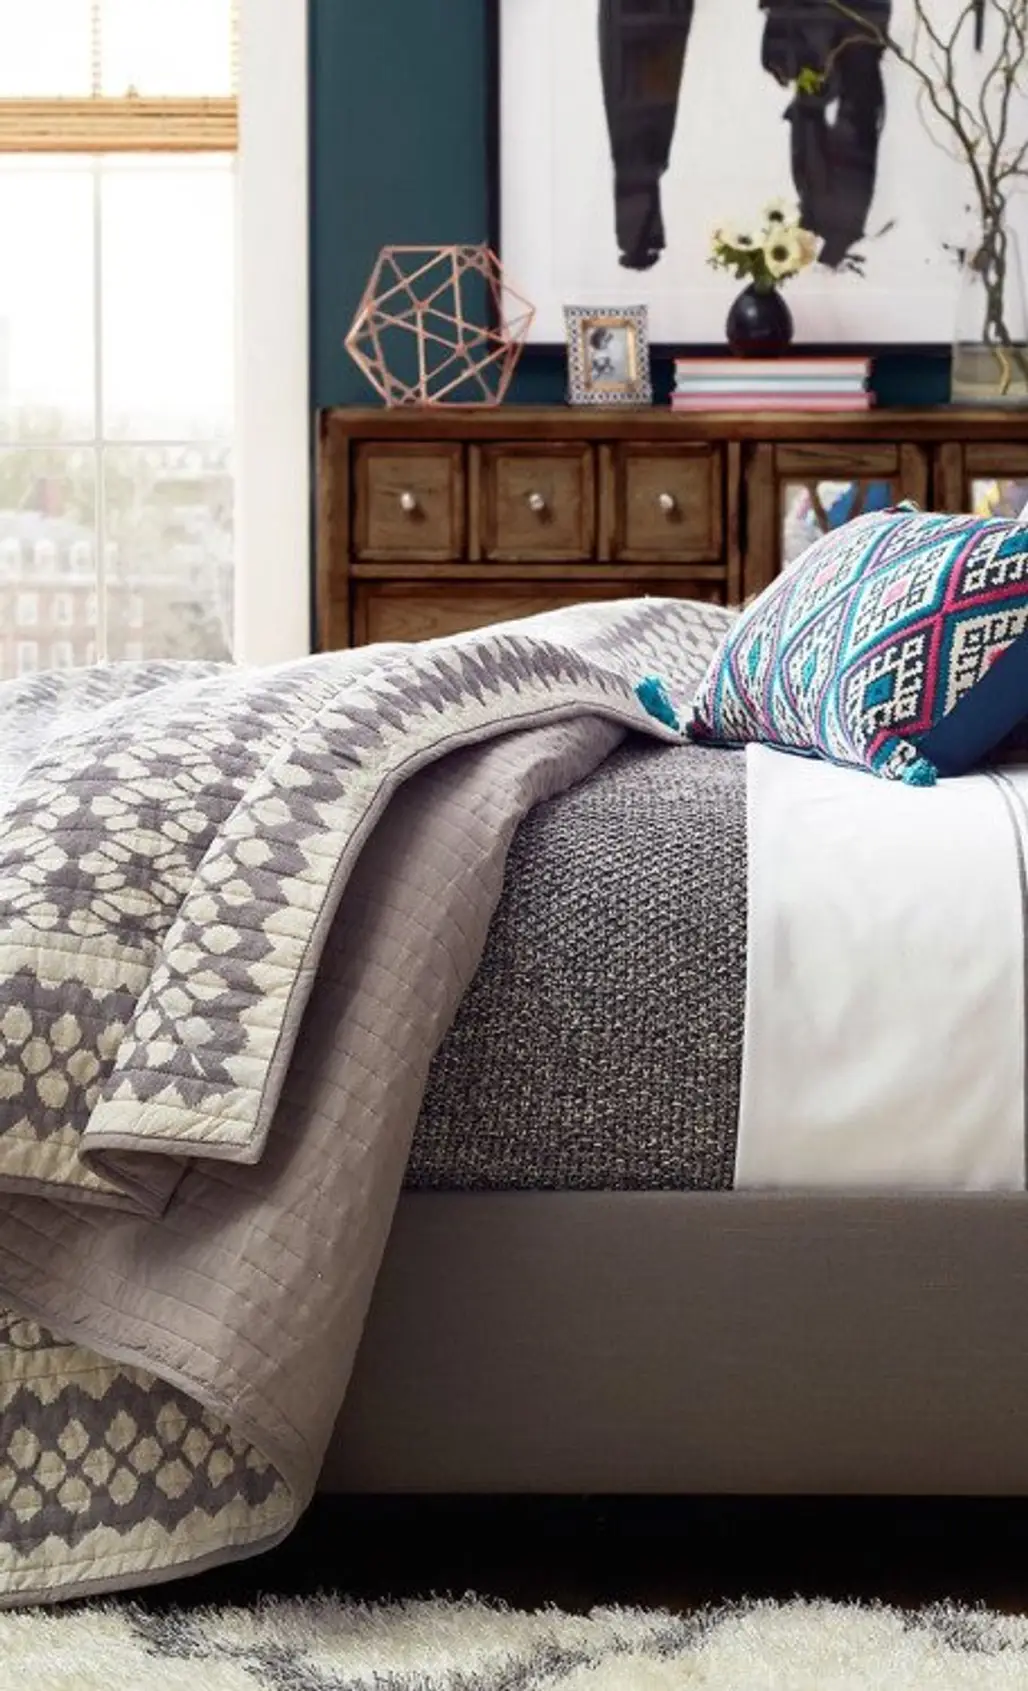 Bedsheets and Other Bedroom Essentials